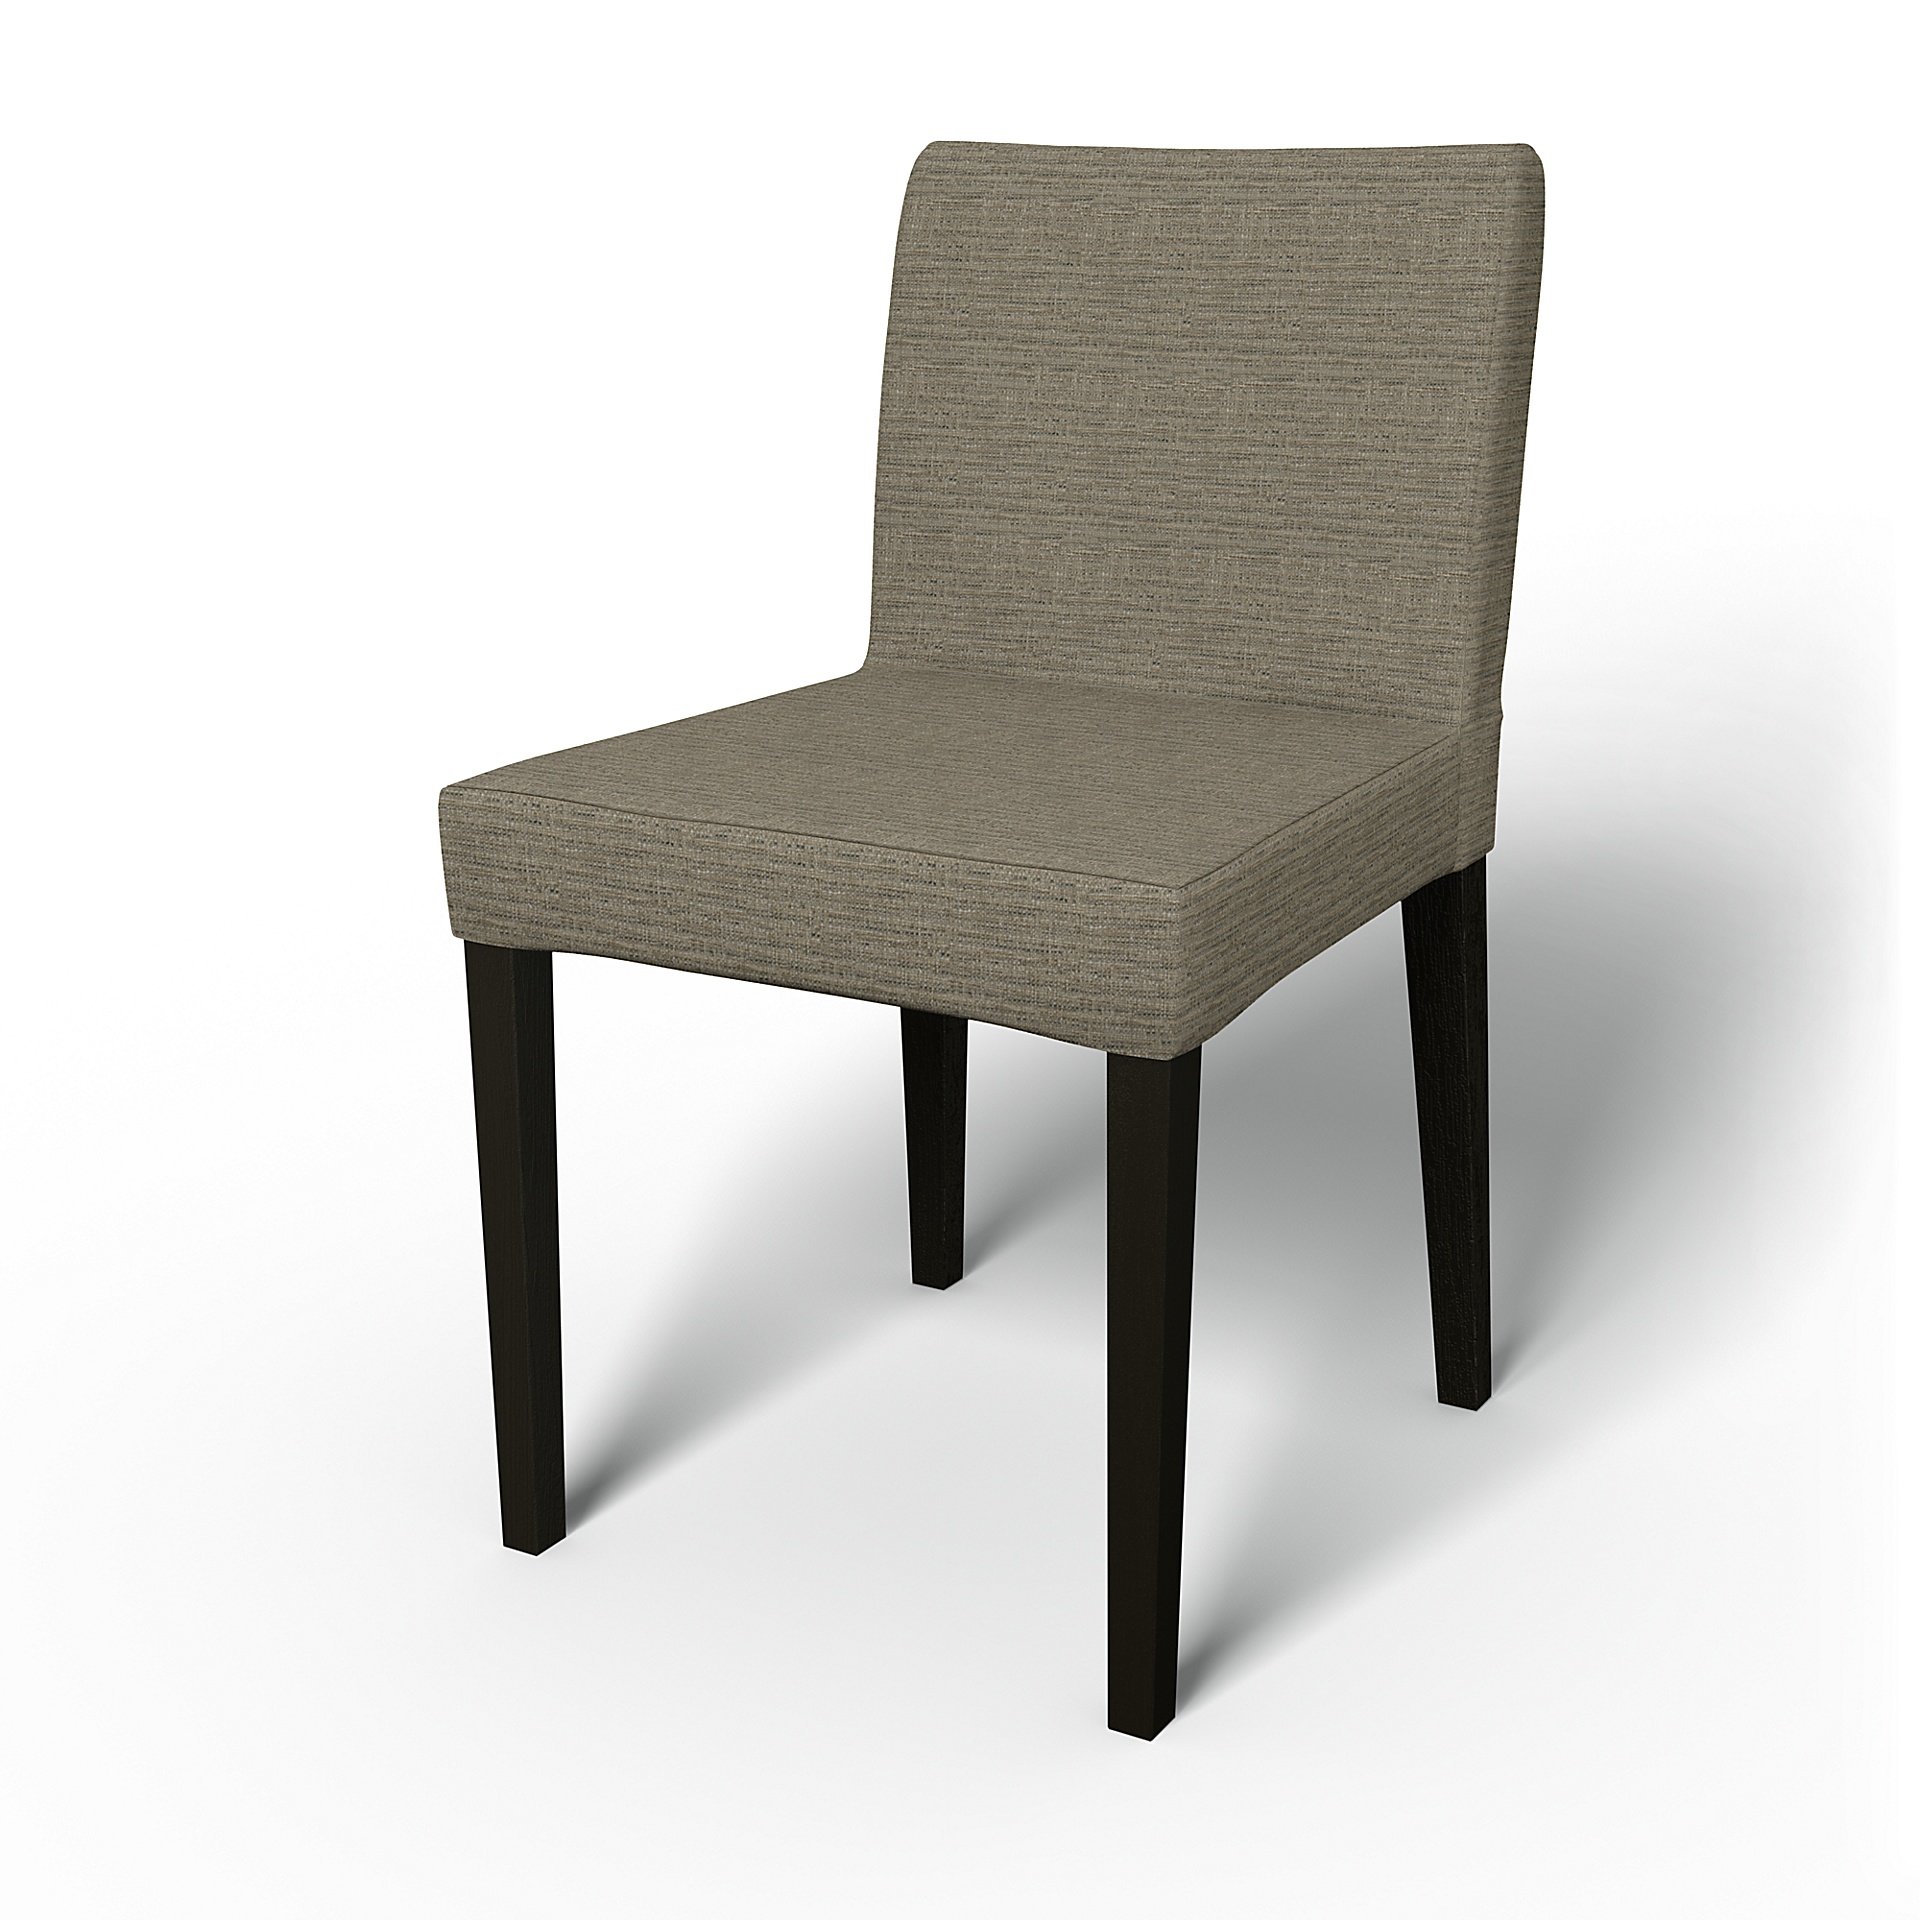 IKEA - Henrik Dining Chair Cover, Mole Brown, Boucle & Texture - Bemz